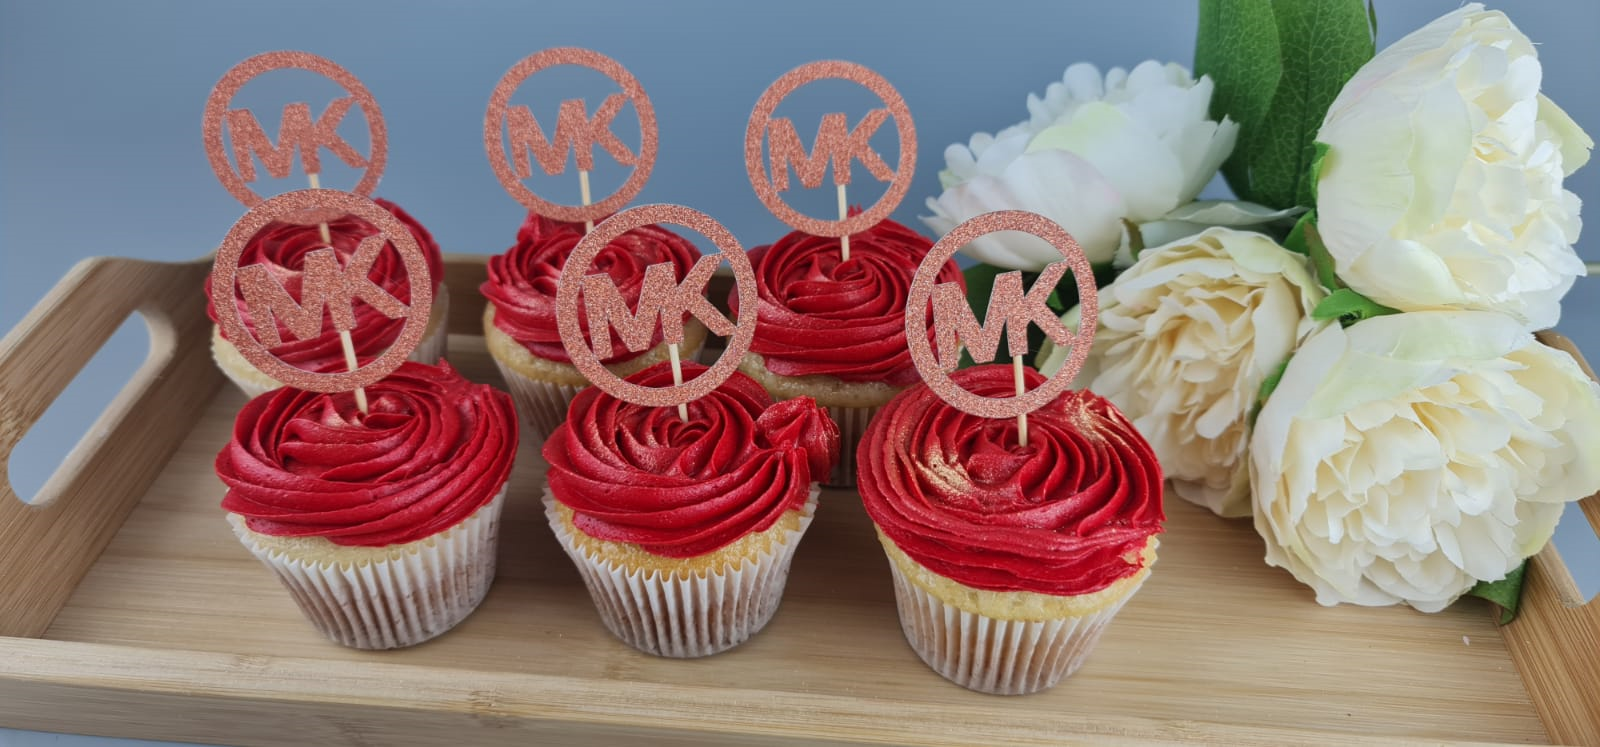 Fashion Theme Michael Kors Cupcakes - Pack of 6